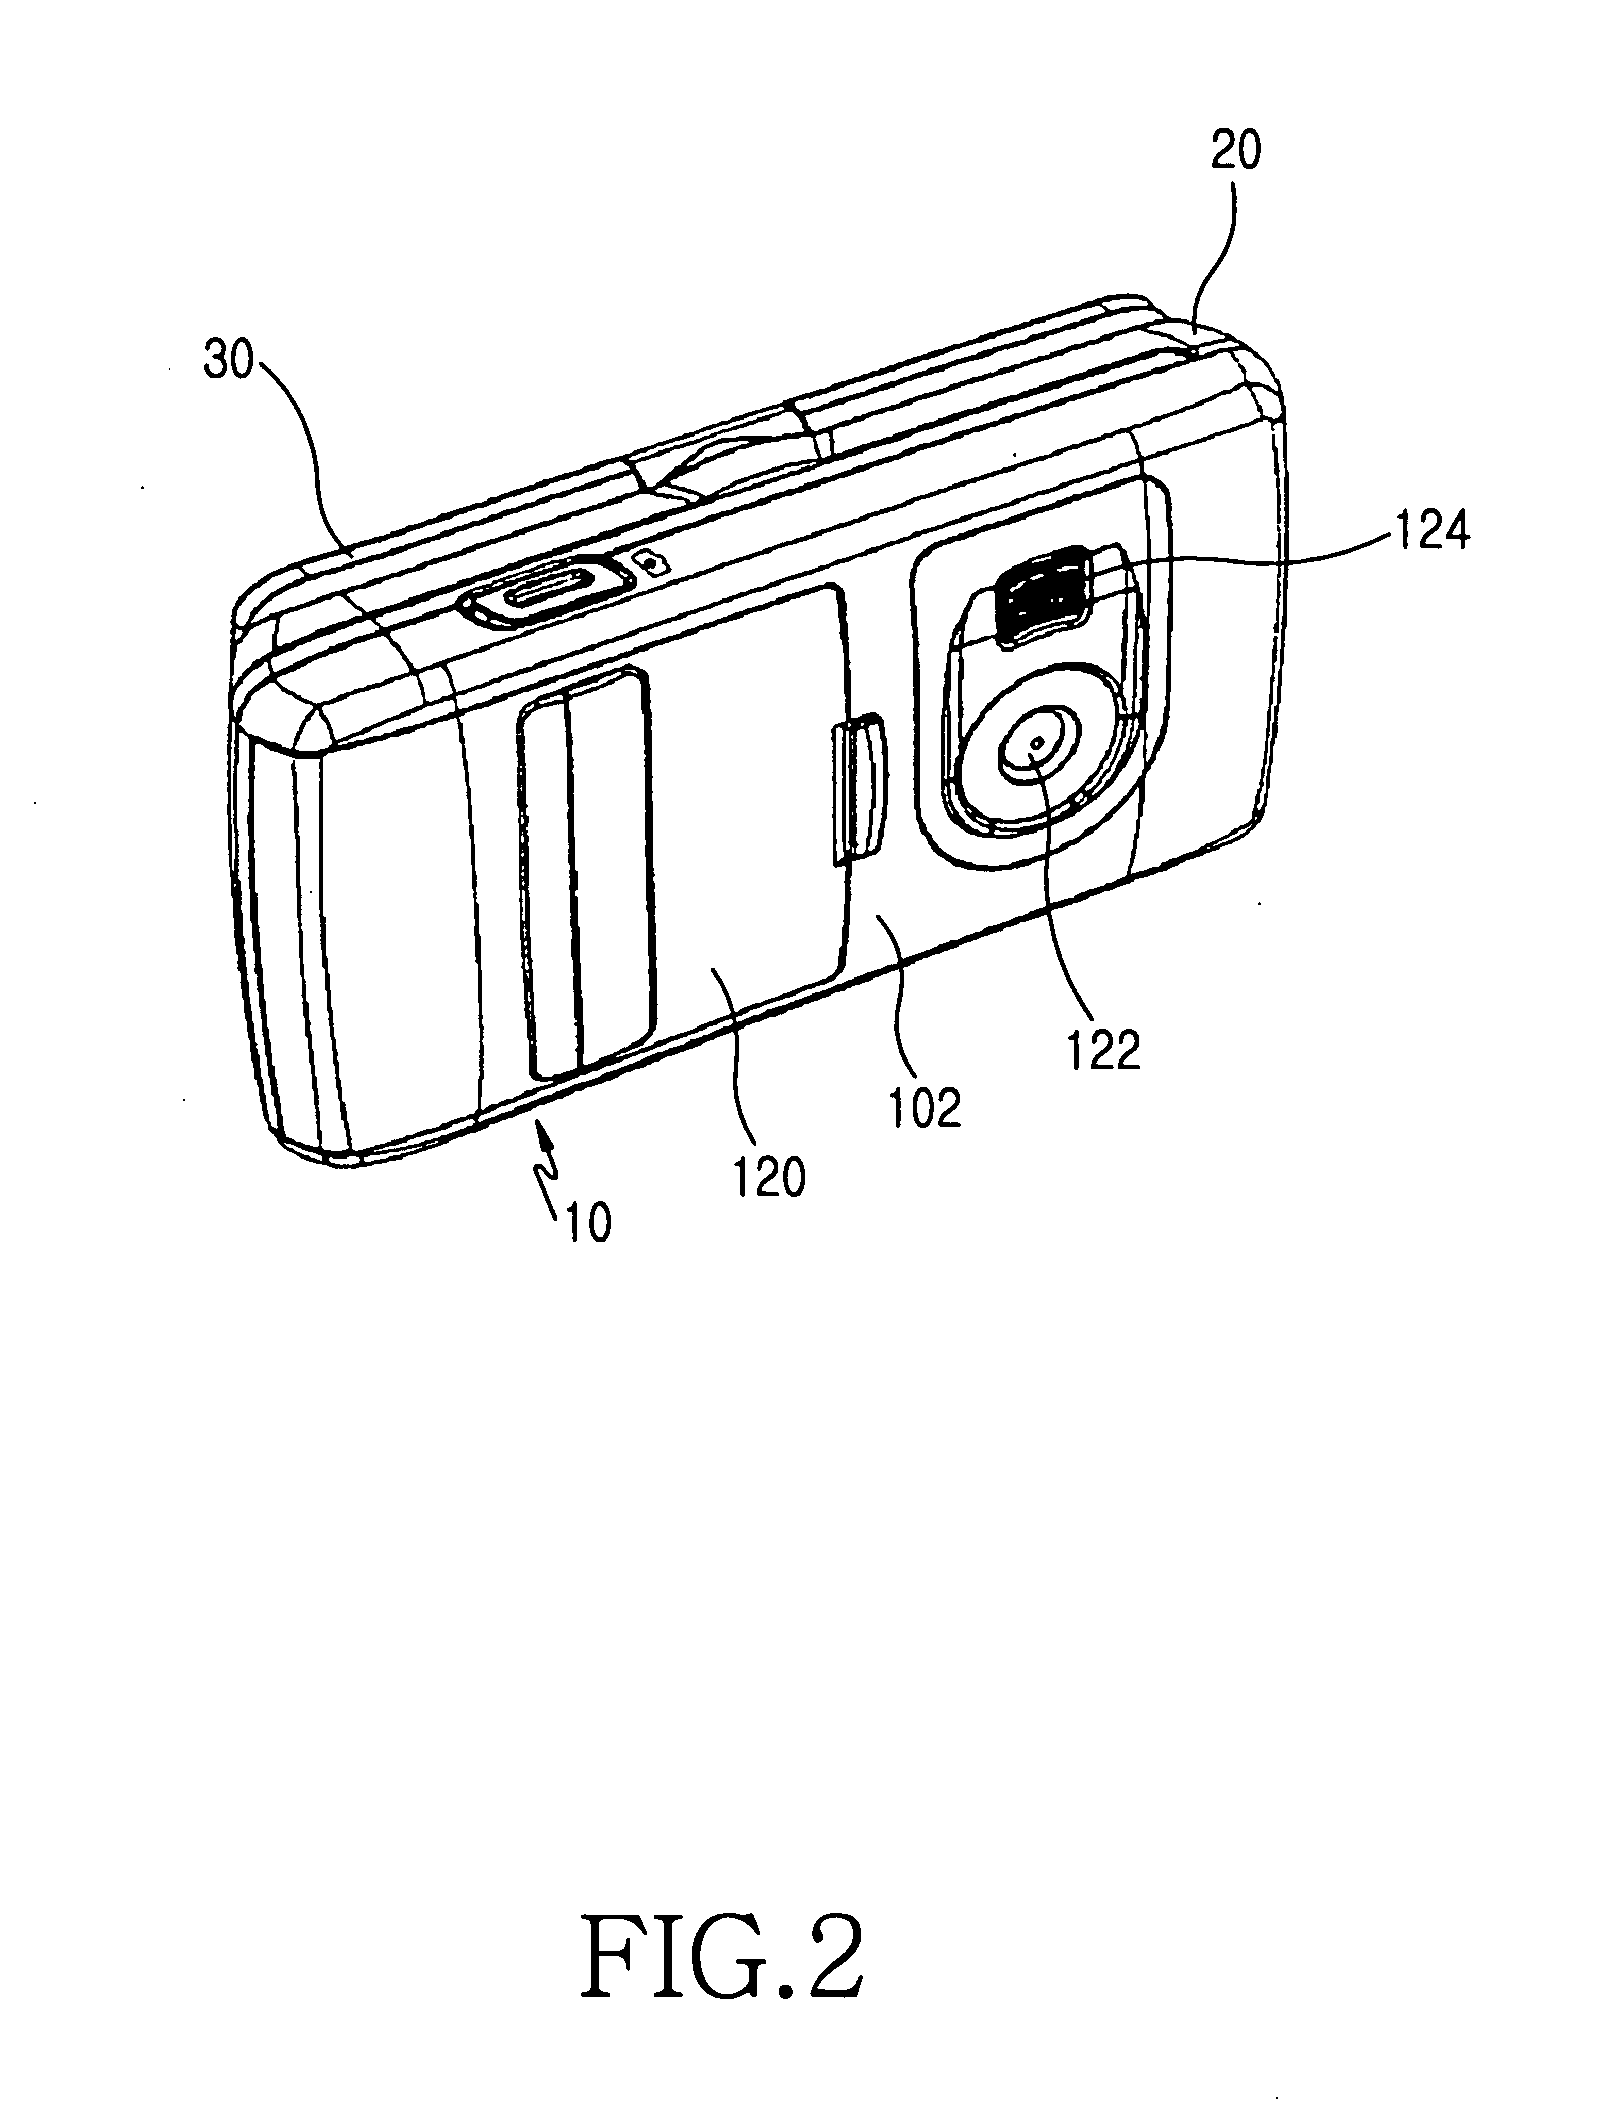 Sliding/folding-type portable apparatus